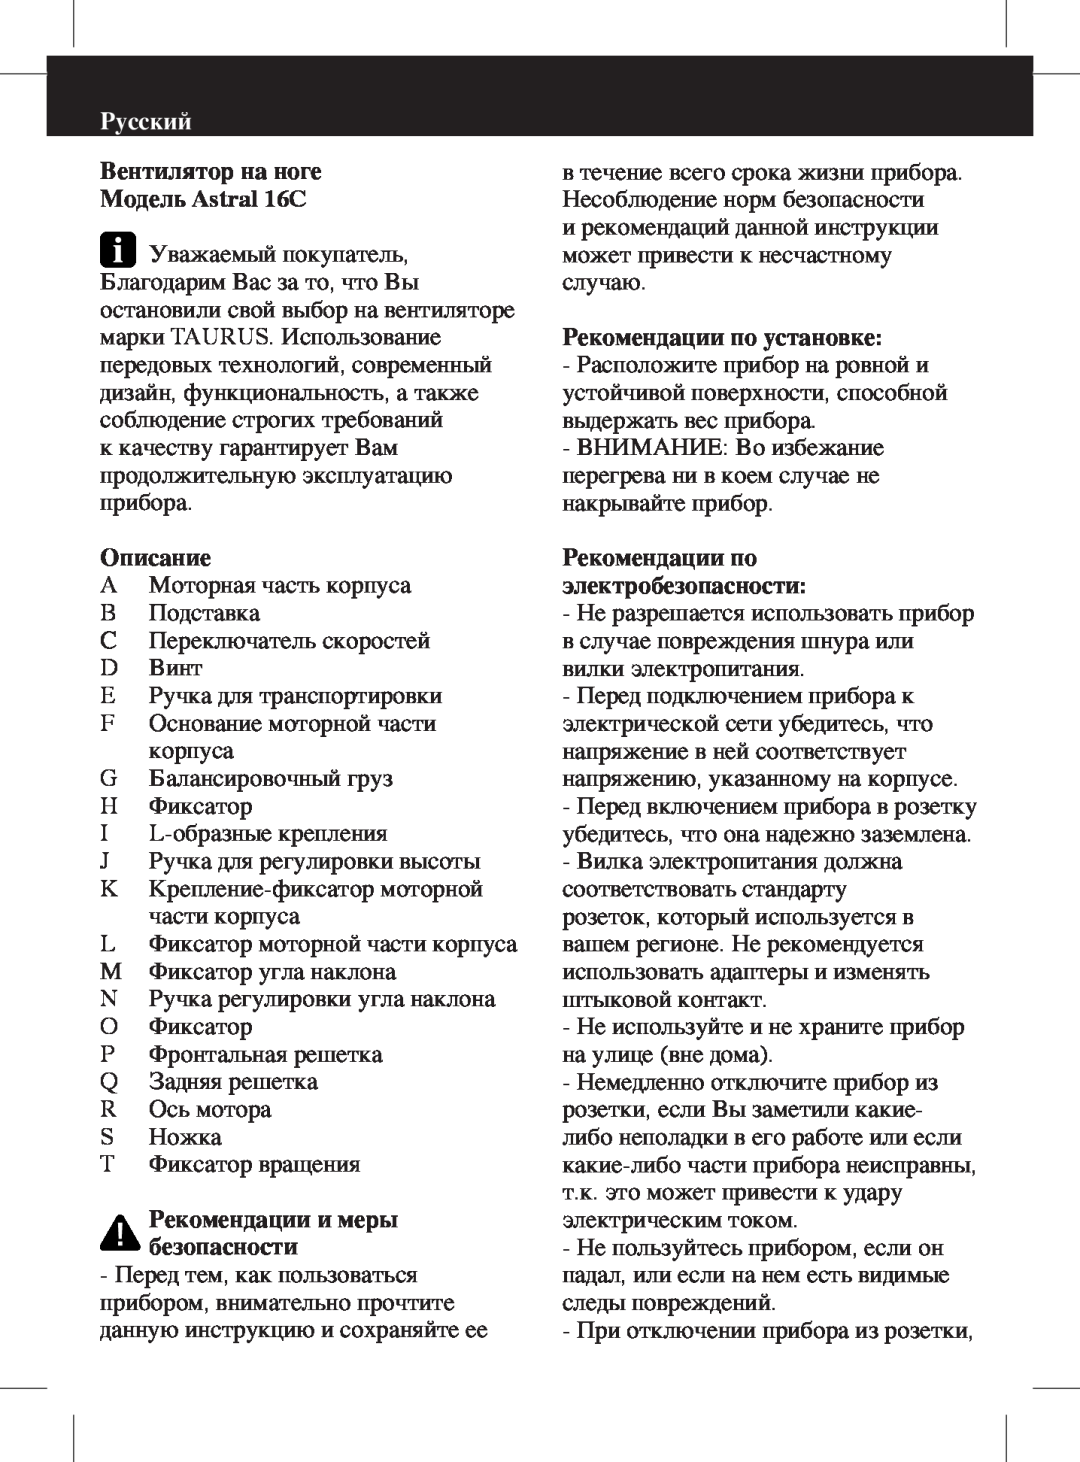 Taurus Group Astral 16C manual Русский, Рекомендации по установке, Описание, электробезопасности, Рекомендации и меры 